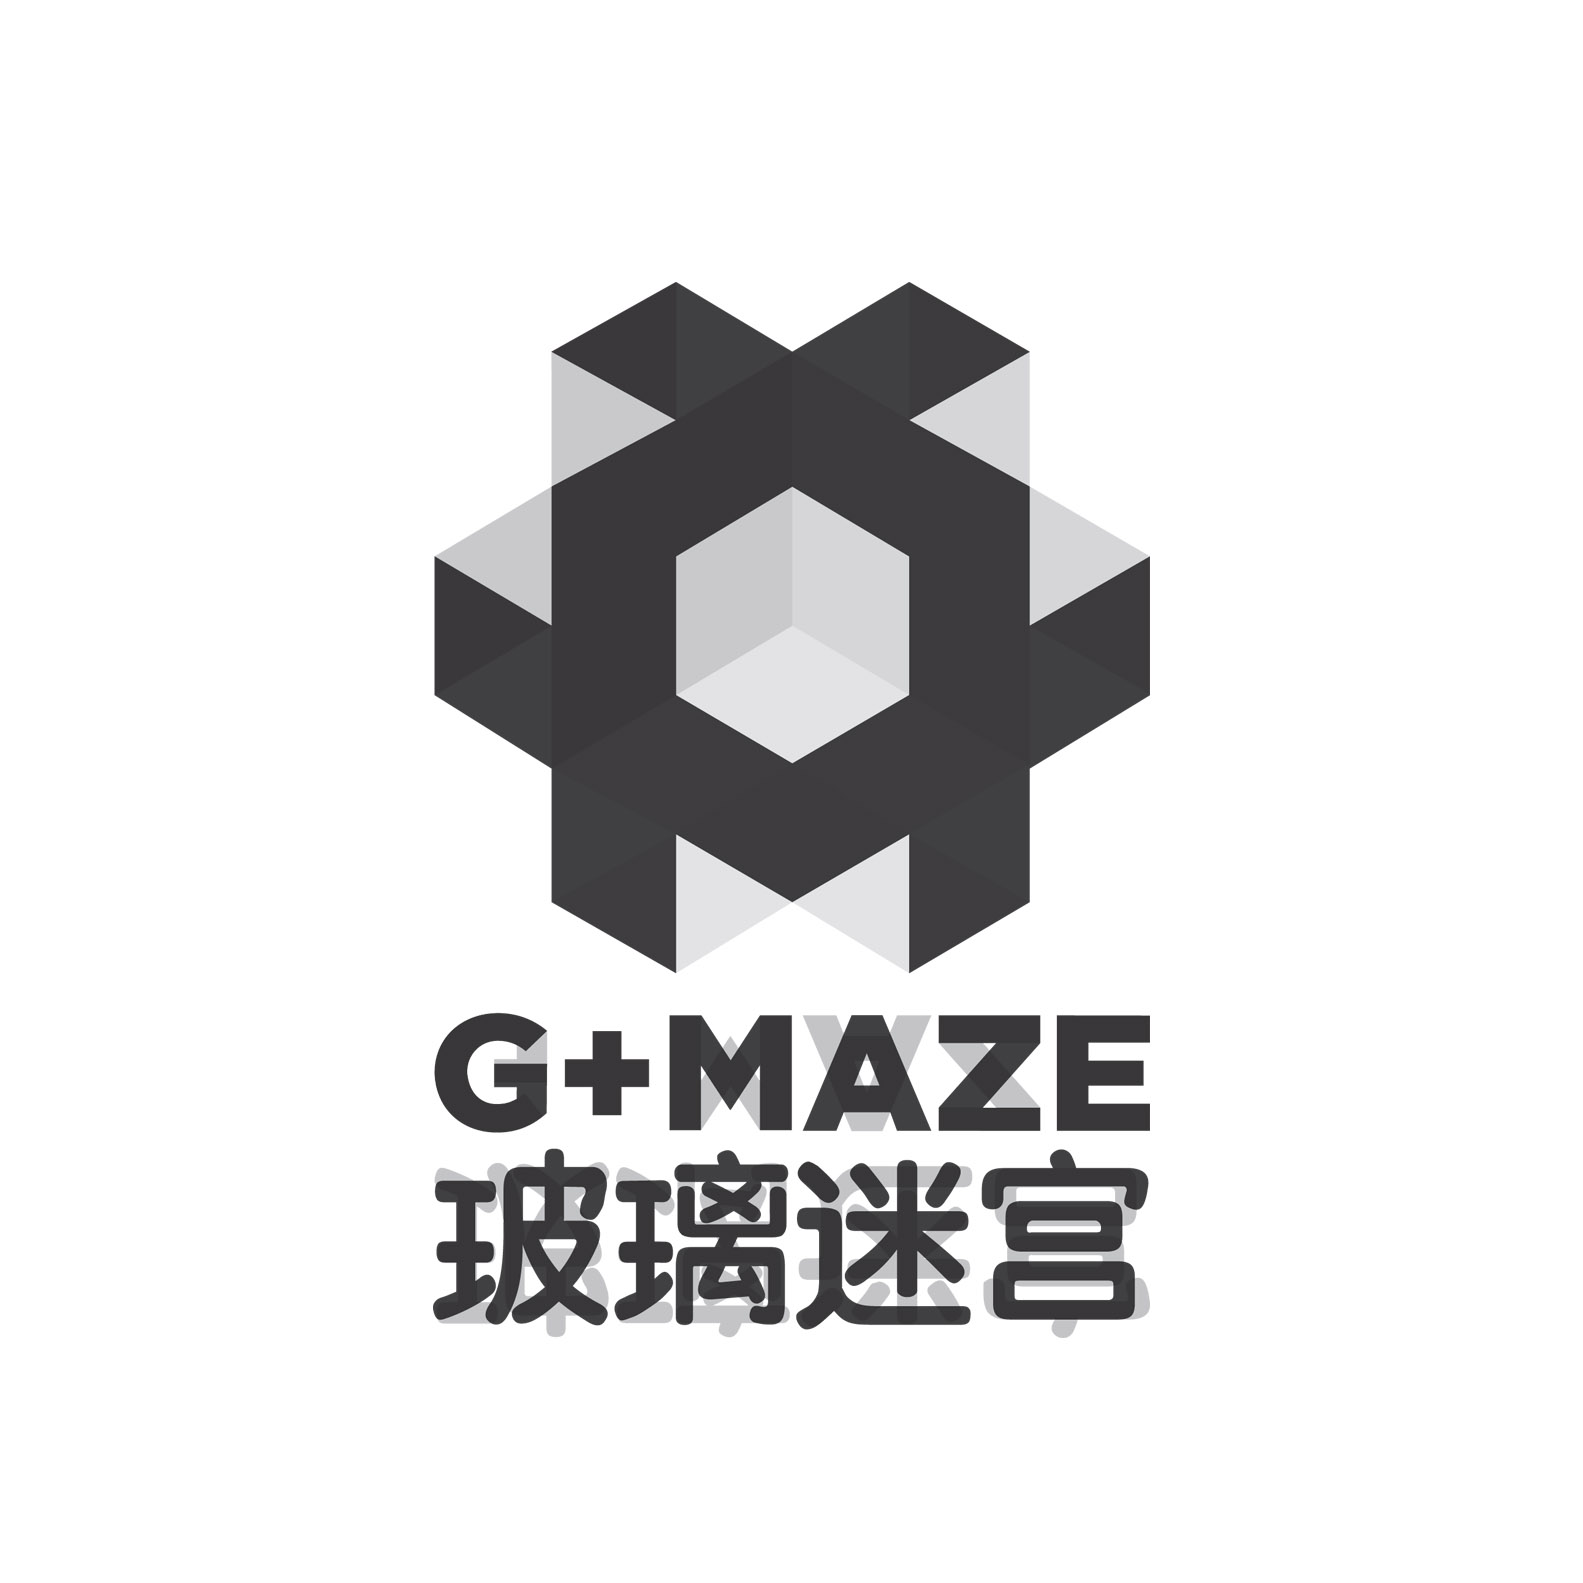 maze-logo